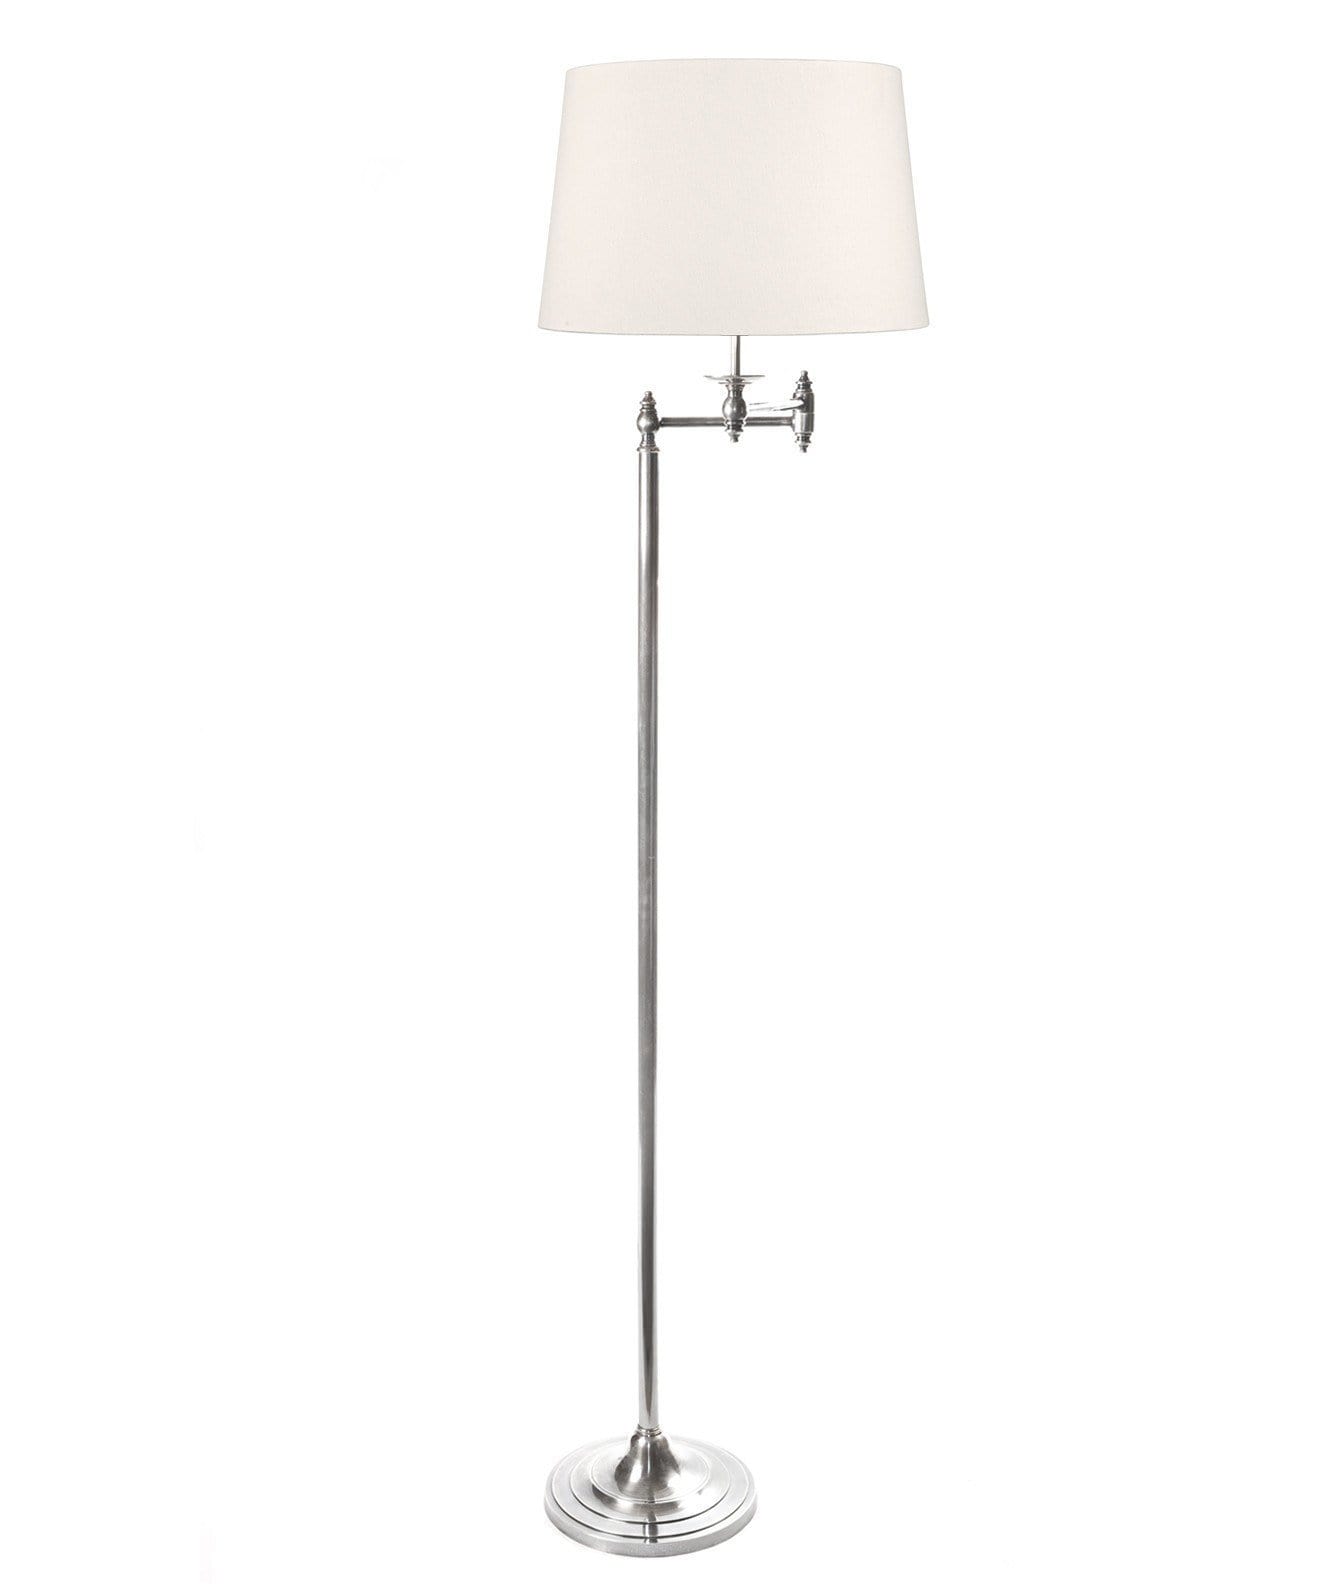 Gaudion Furniture Floor Lamp 1 x Nickel aged lamp base (shade sold separatley) in stock Floor Lamp Orsay Aged Nickel or Brass